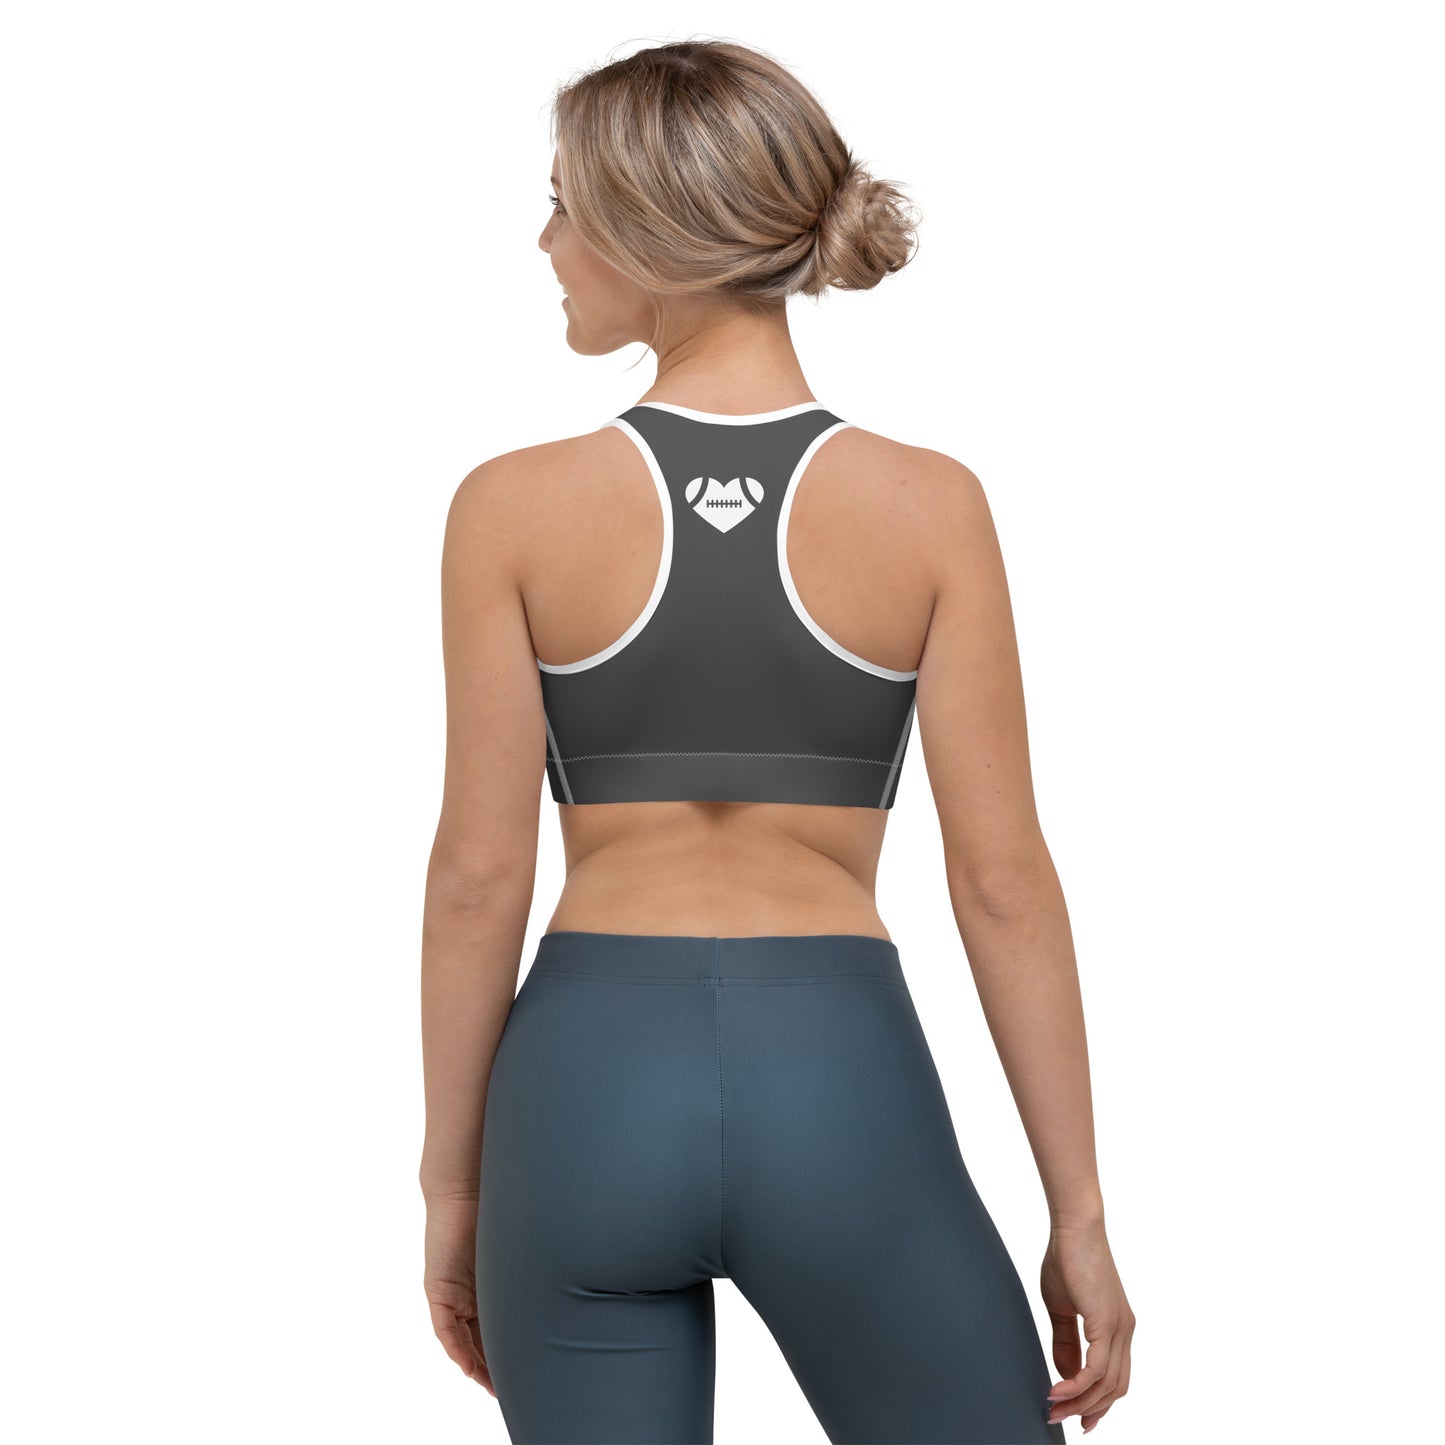 AFA Basics Eclipse Sports bra